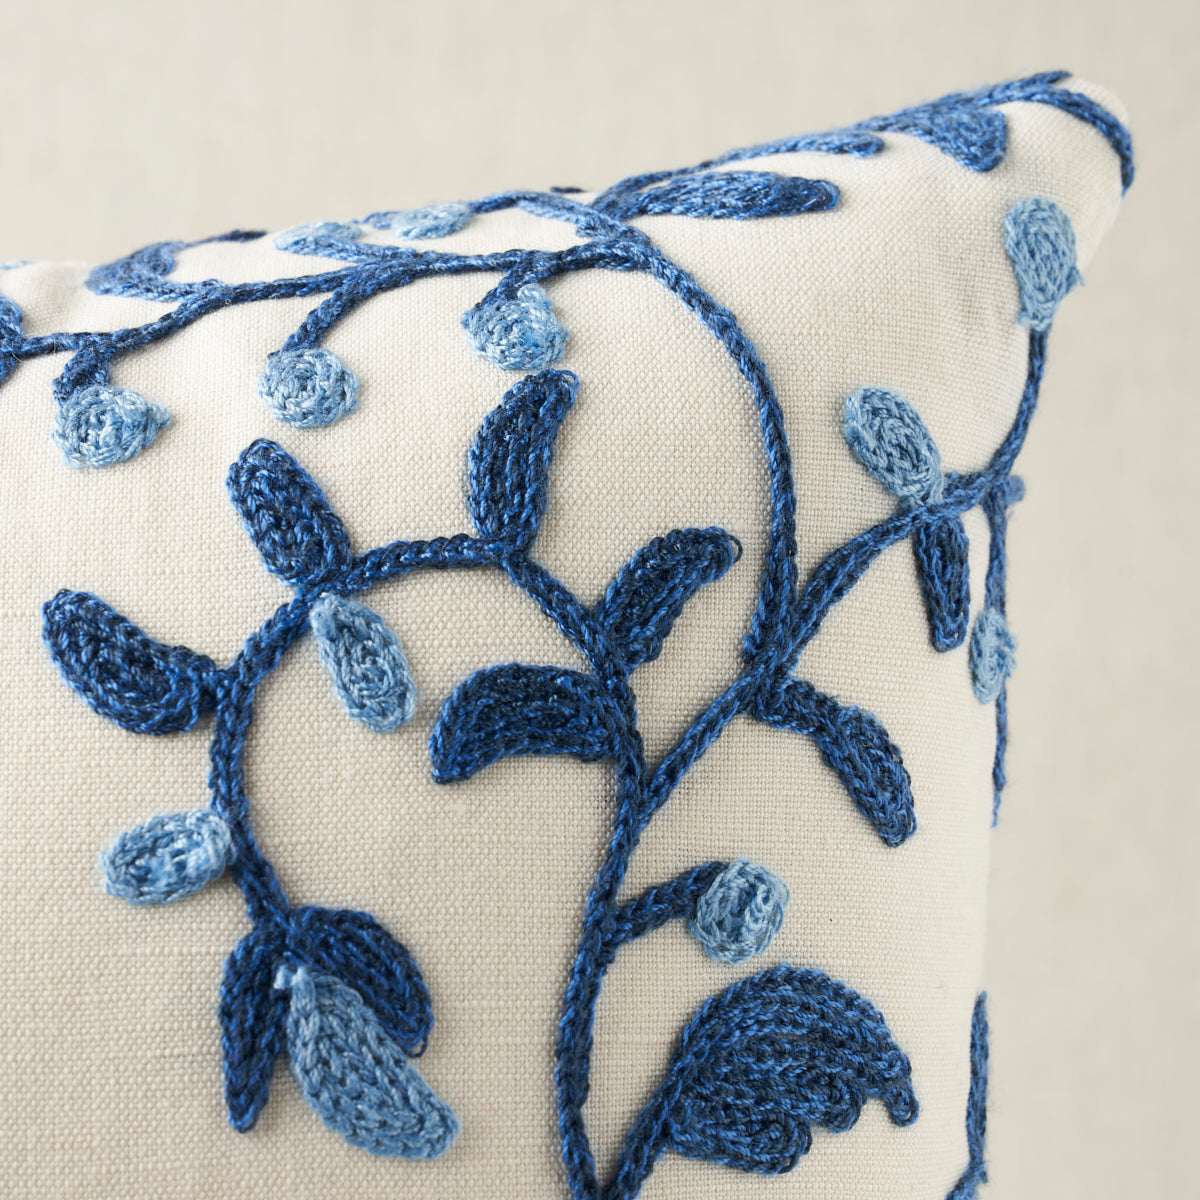 Purchase So814310302 | Raleigh Crewel Embroidery Pillow C, Cornflower - Schumacher Pillows